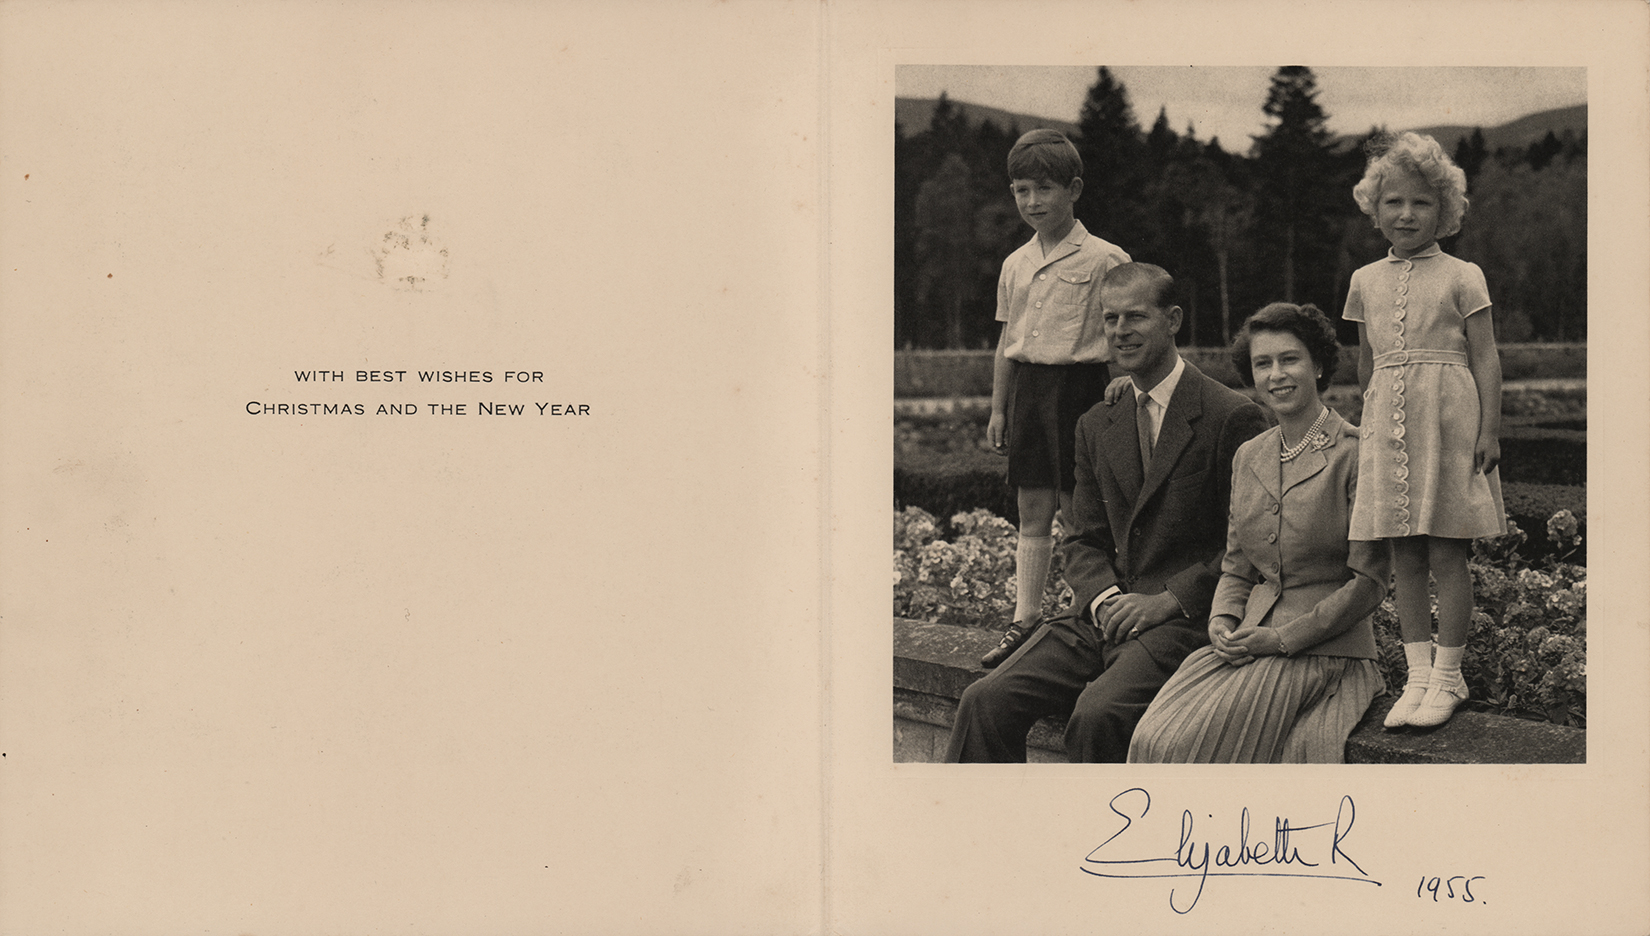 Lot #193 Queen Elizabeth II Signed Christmas Card (1955) - Image 1